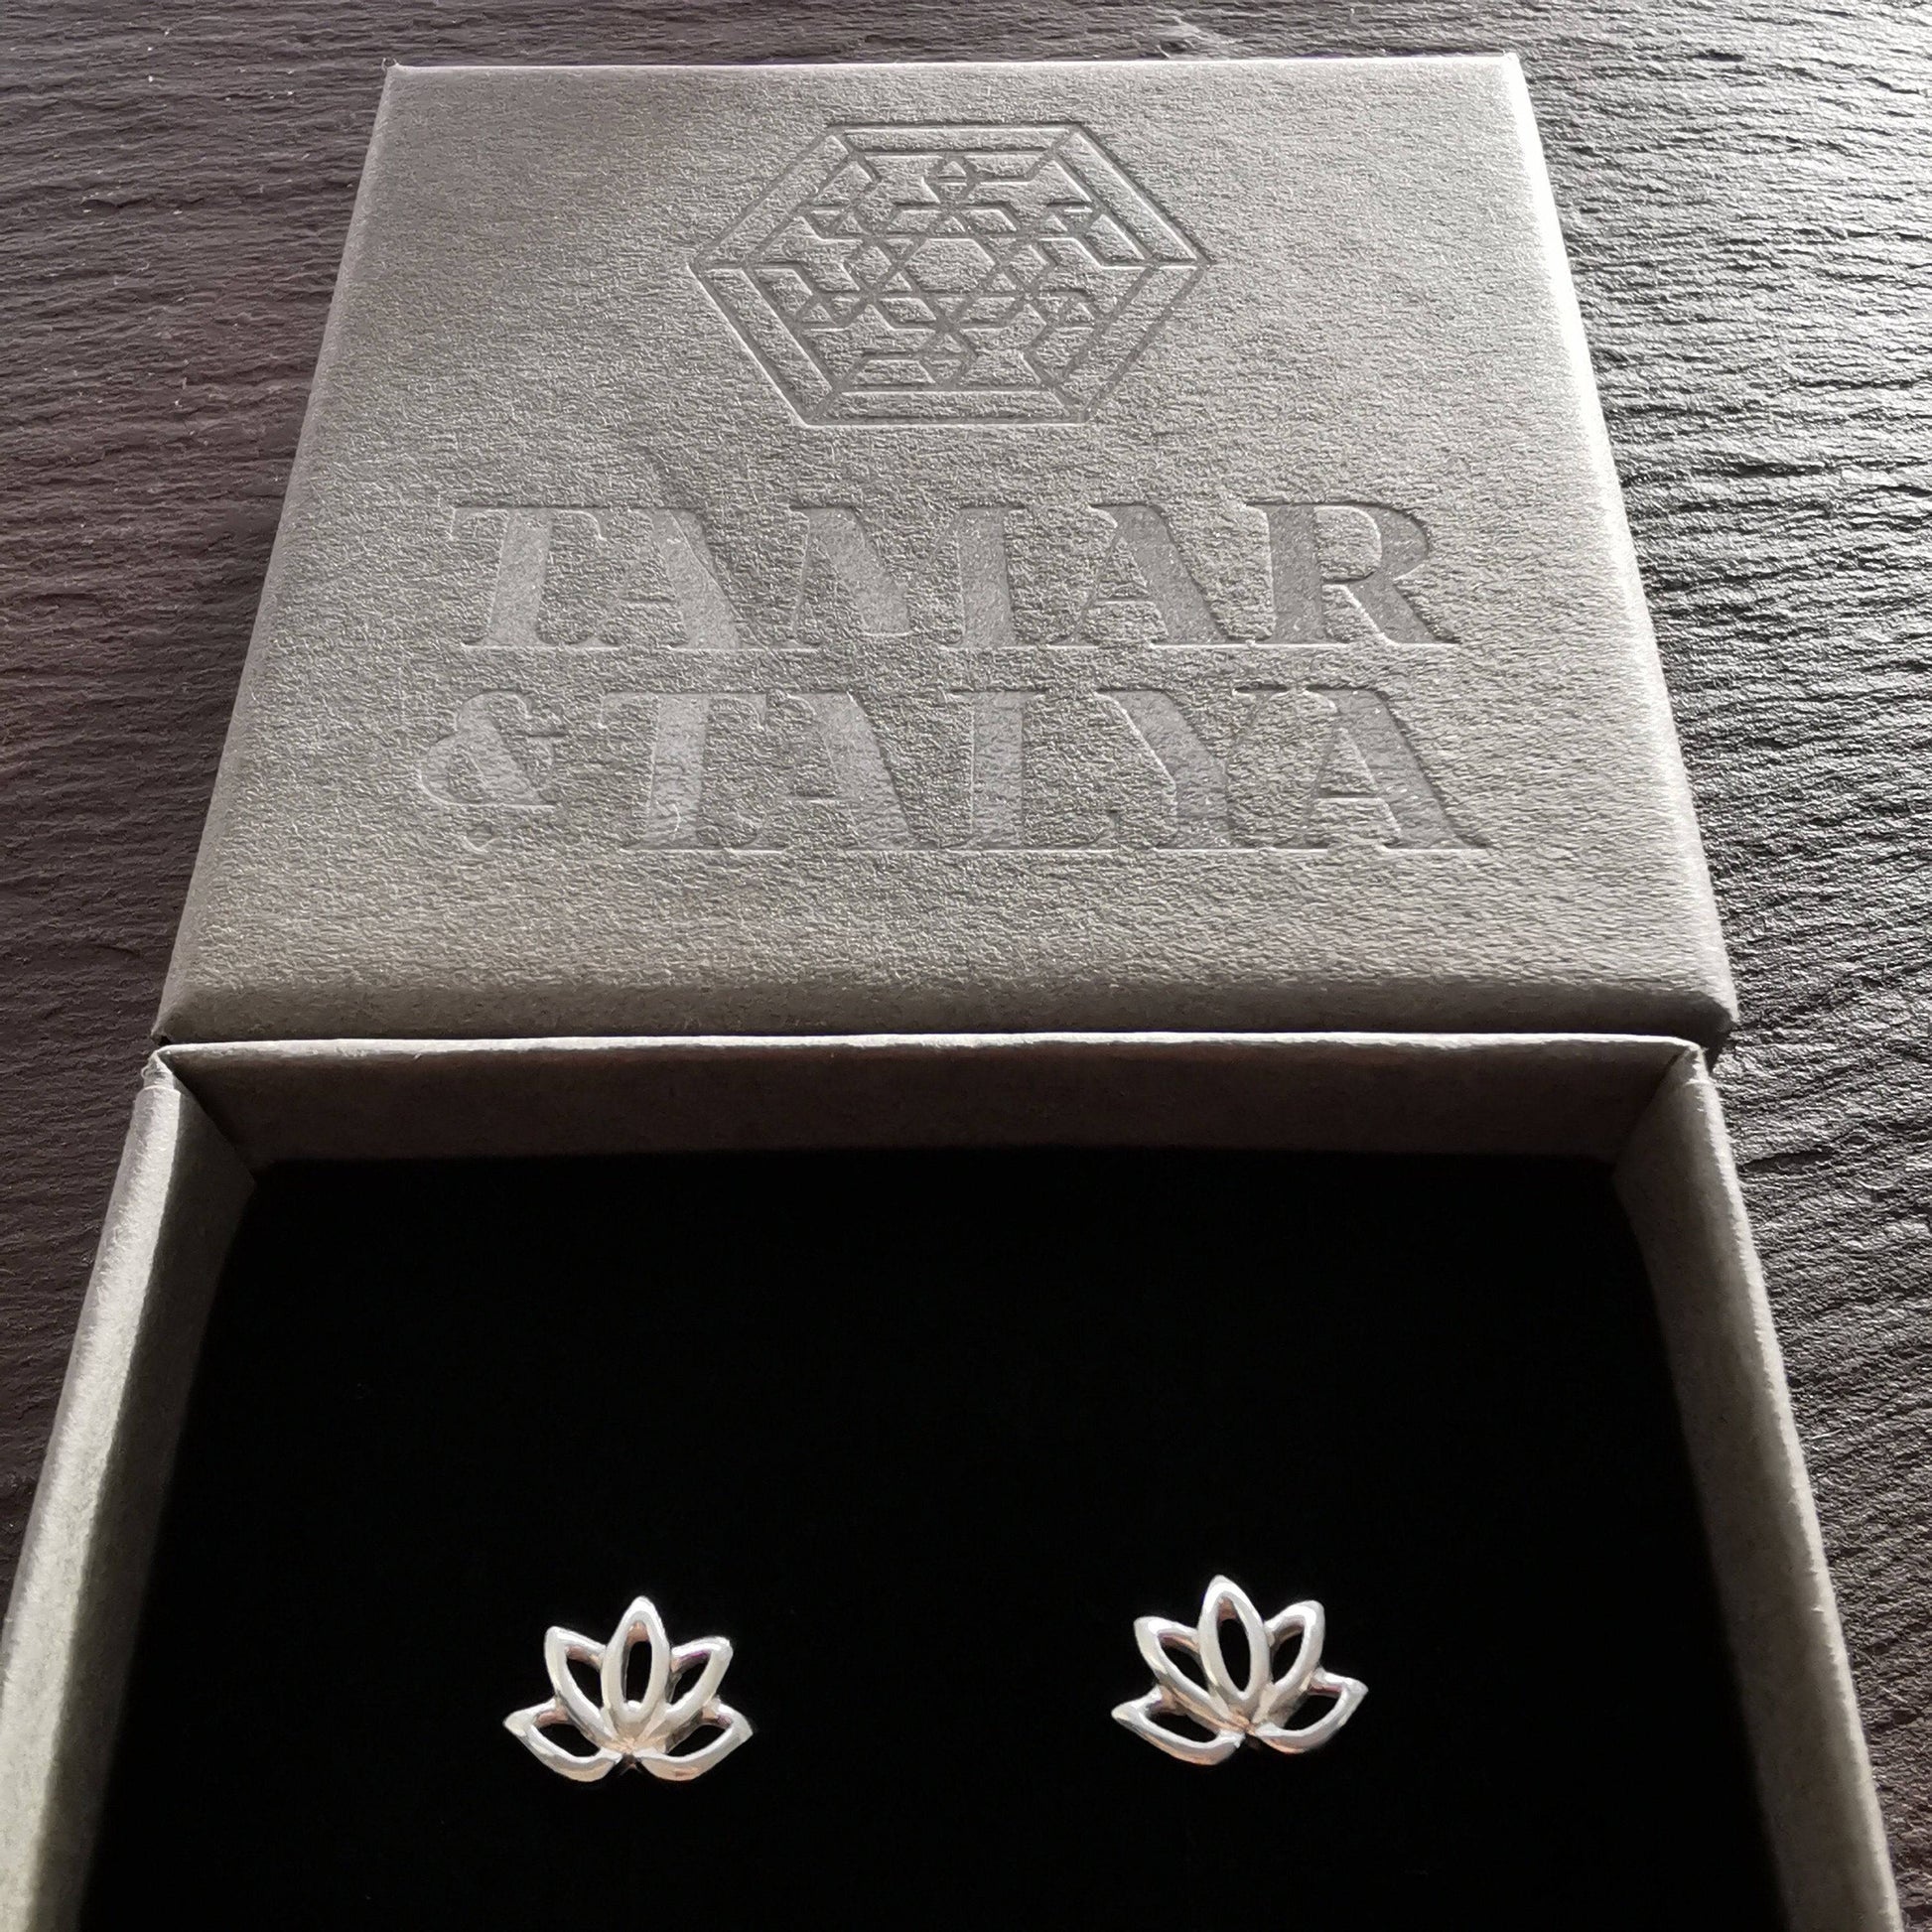 Lotus earrings - Tamar and Talya